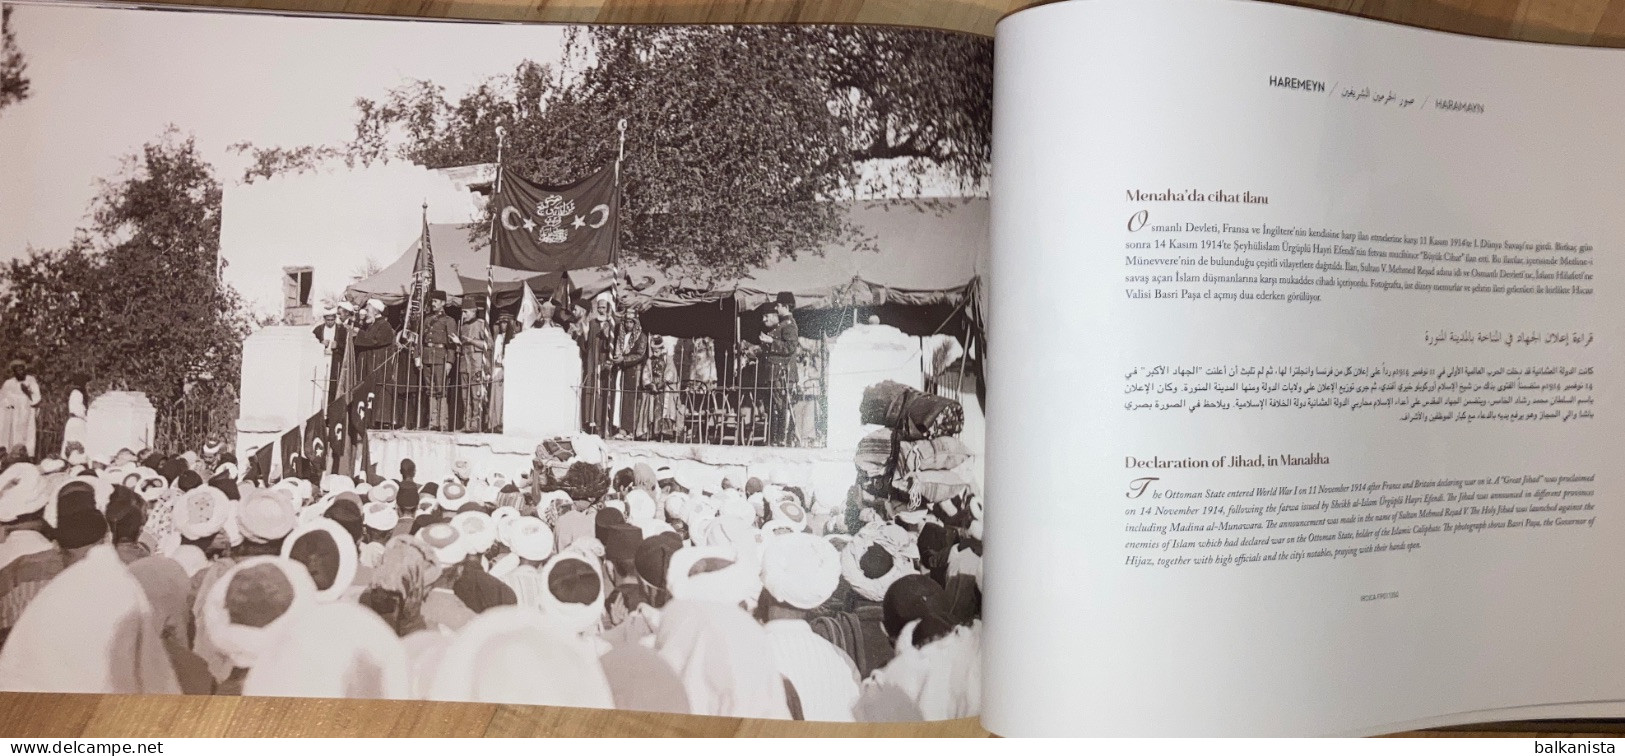 Arabia Mecca Kaaba Haremeyn Medina Photos Ottoman Period Special Album 41x28 Cm - Cultural